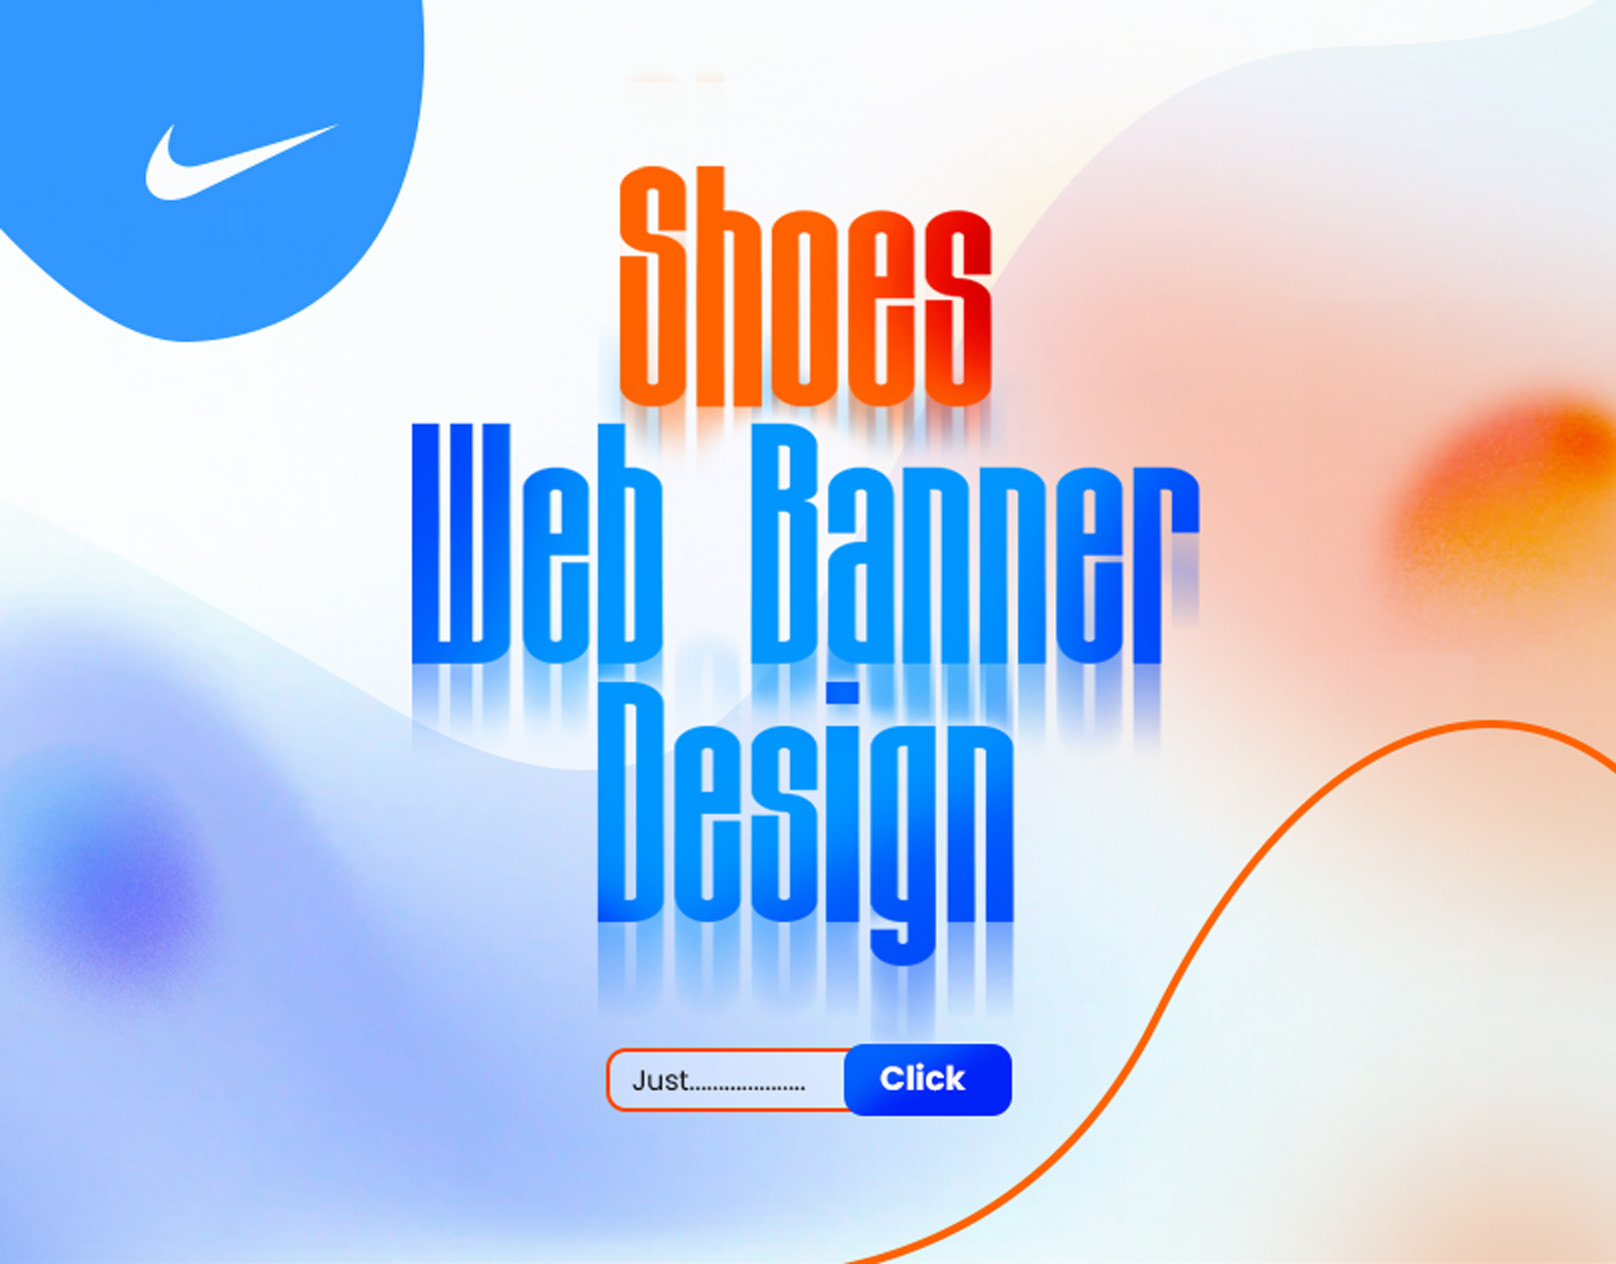 rjahid; web banner; web banner design; web banners; shoes web banner; web design; shoes; social